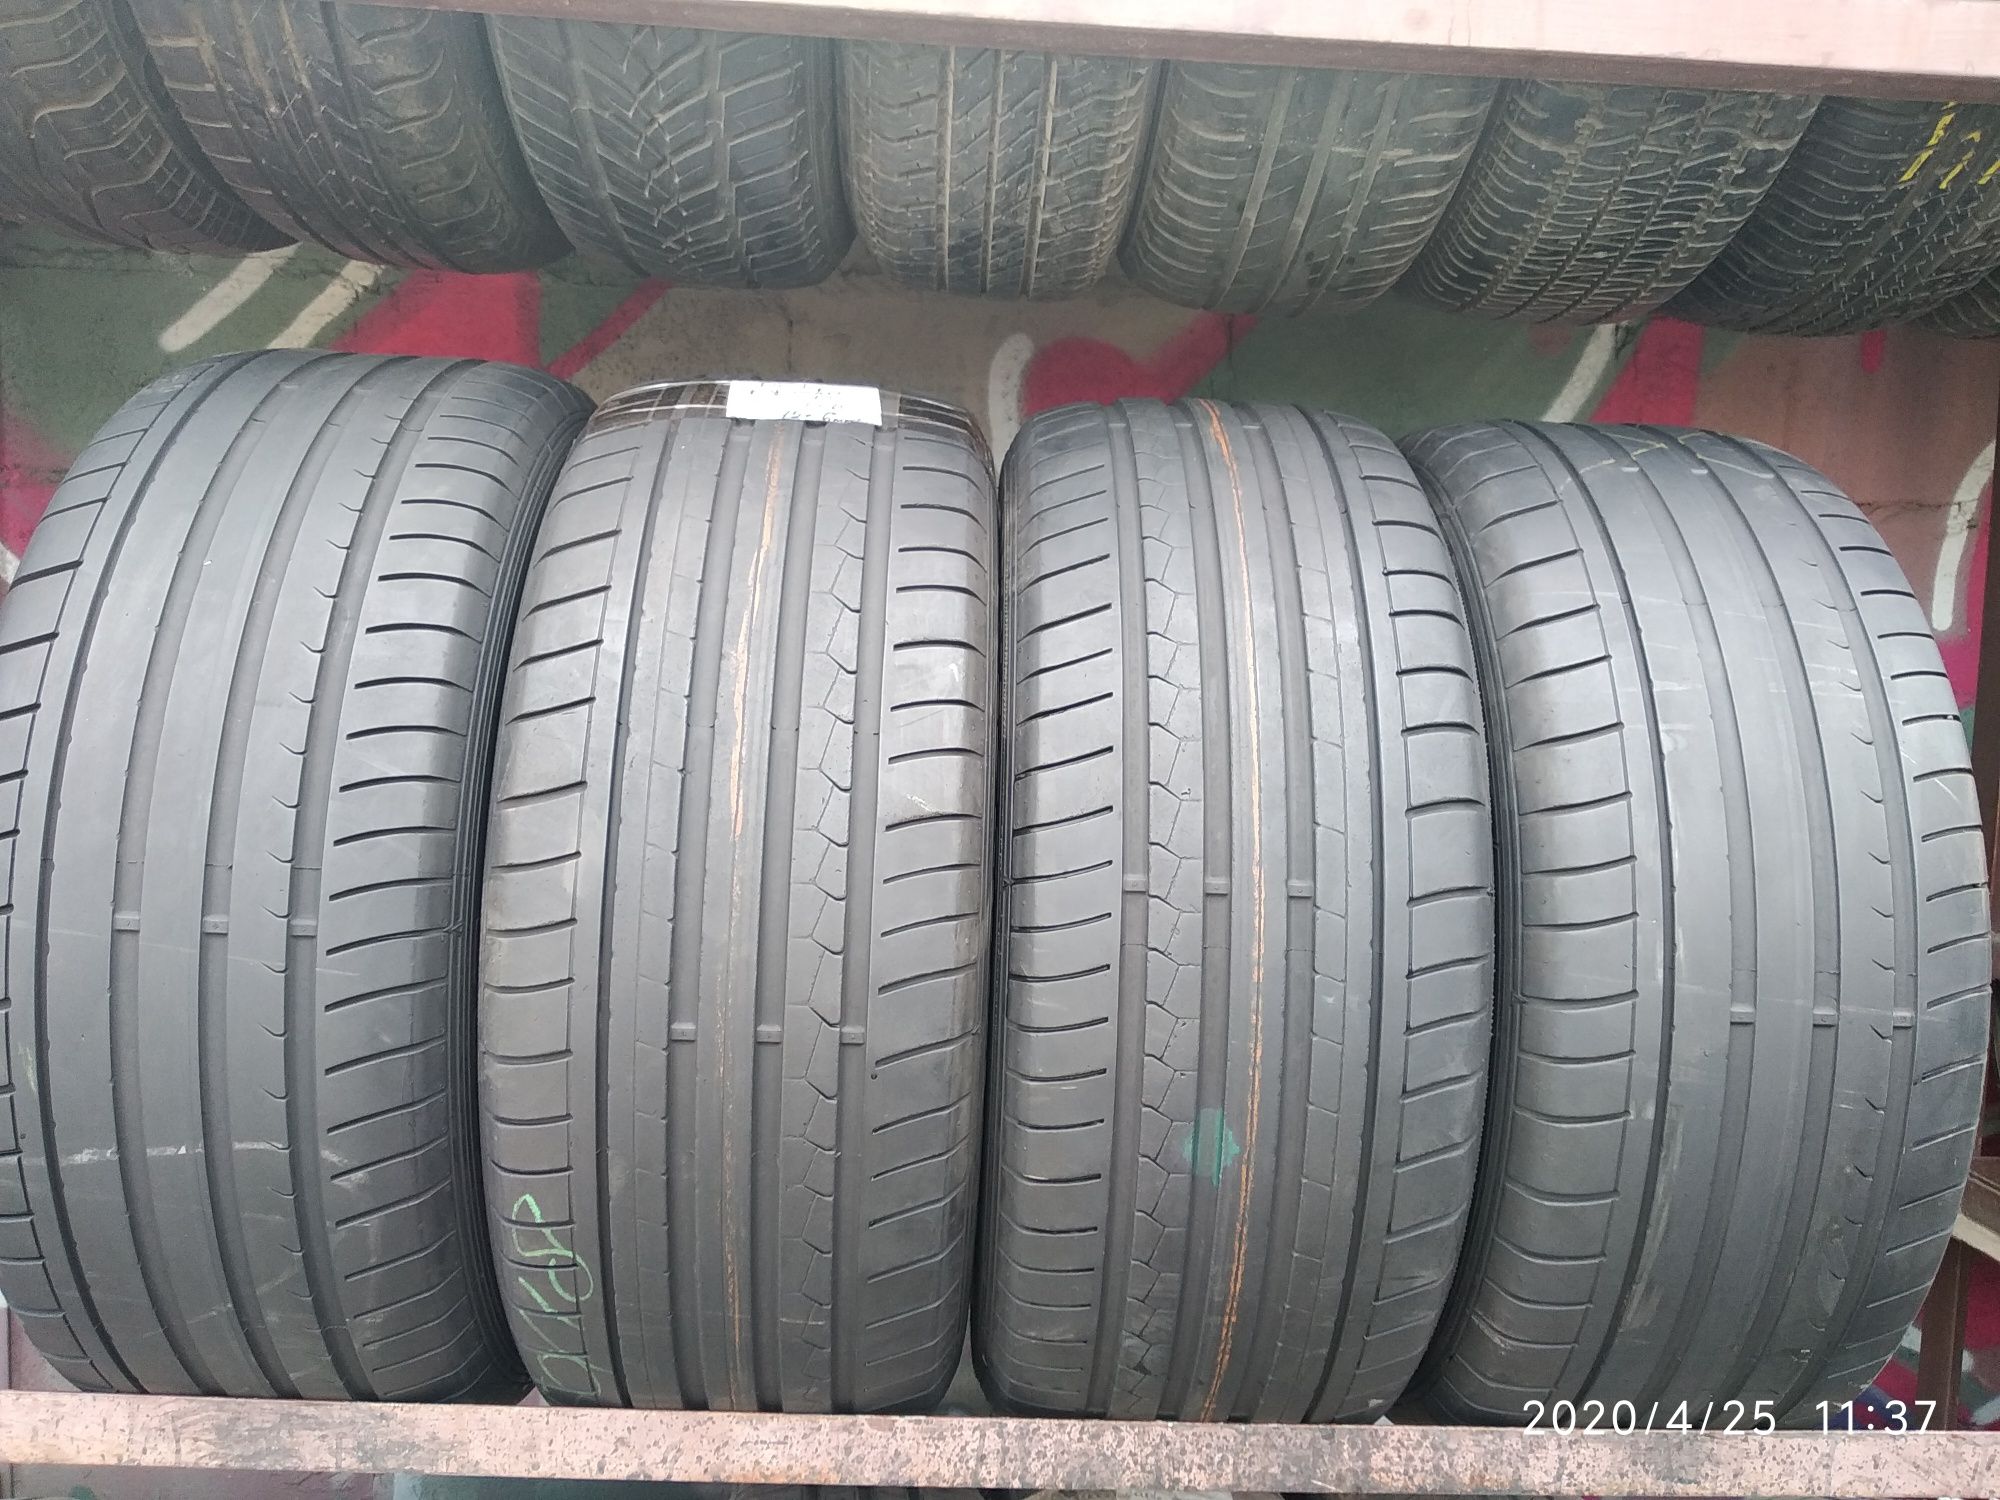 245/50r18 Dunlop Pirelli Michelin Bridgestone лето б/у шины с Германии